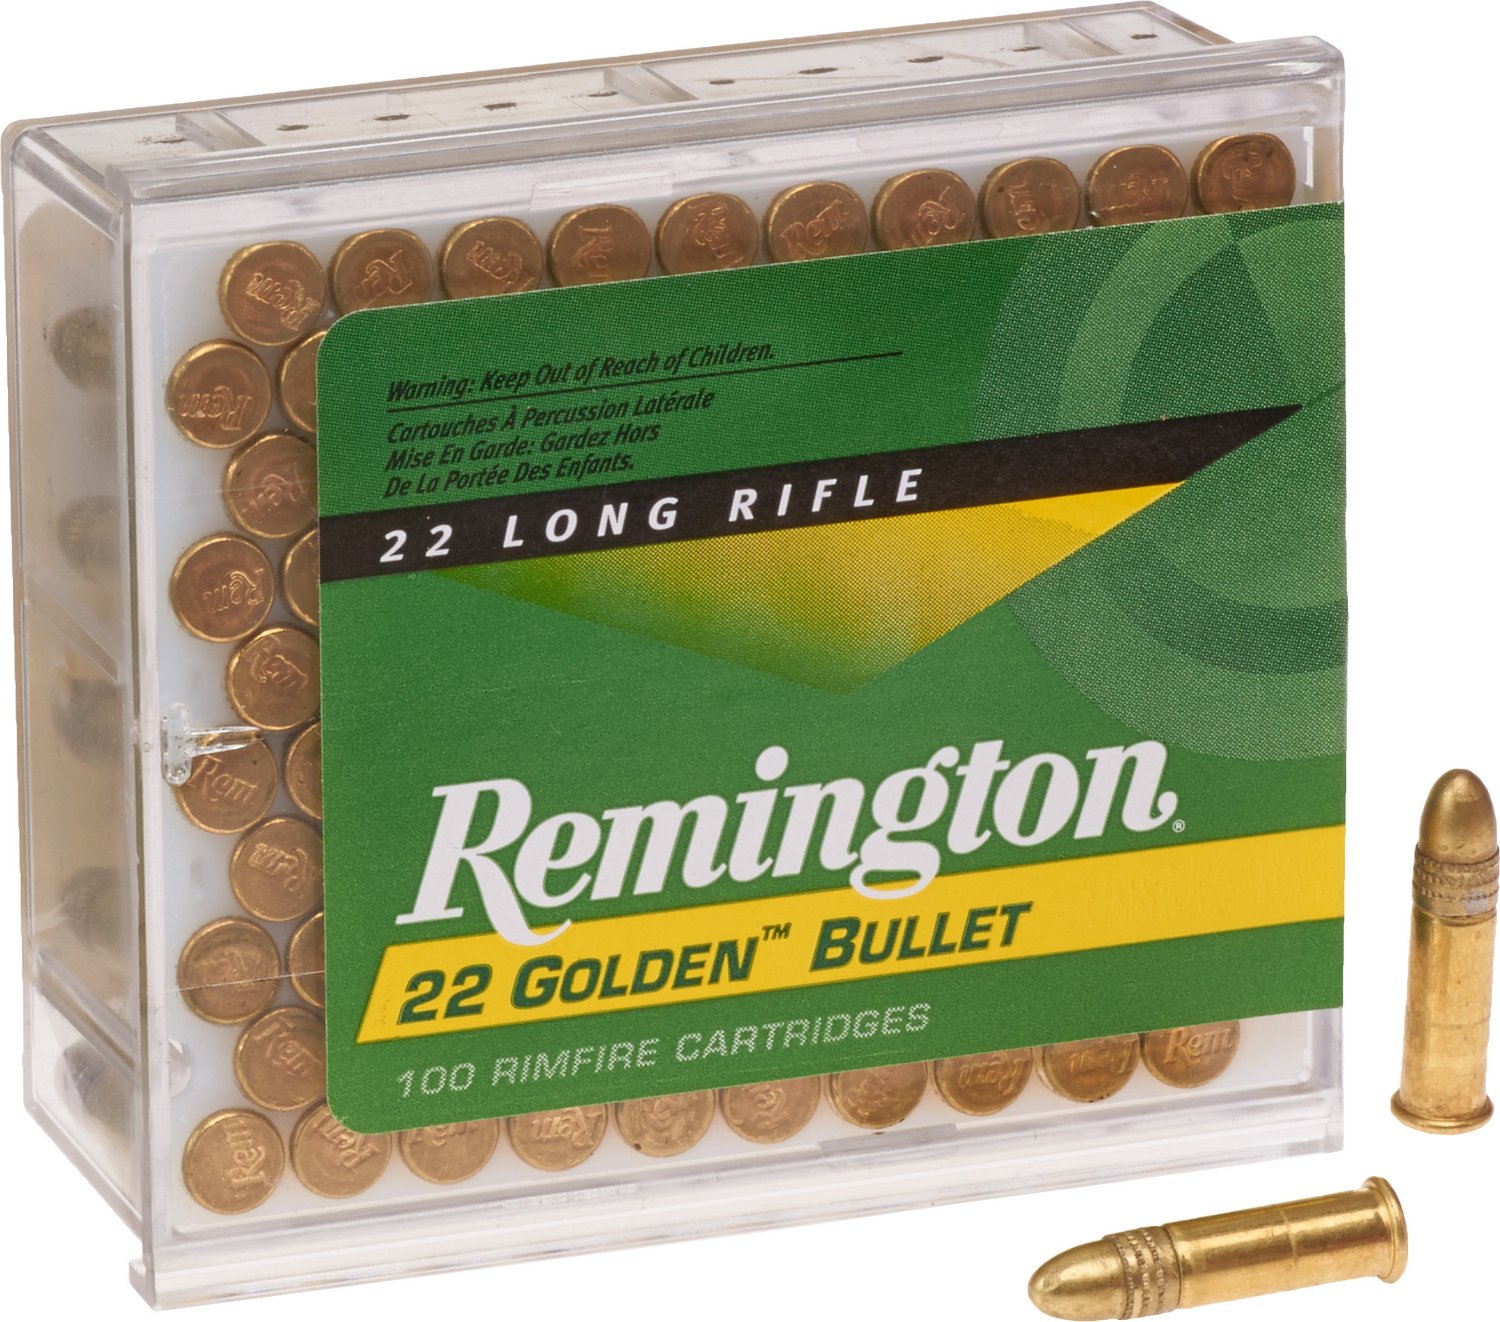 Remington 22 Golden Bullet 22 LR, 40 gr, Brass Plated Round Nose Rimfire  Ammunition